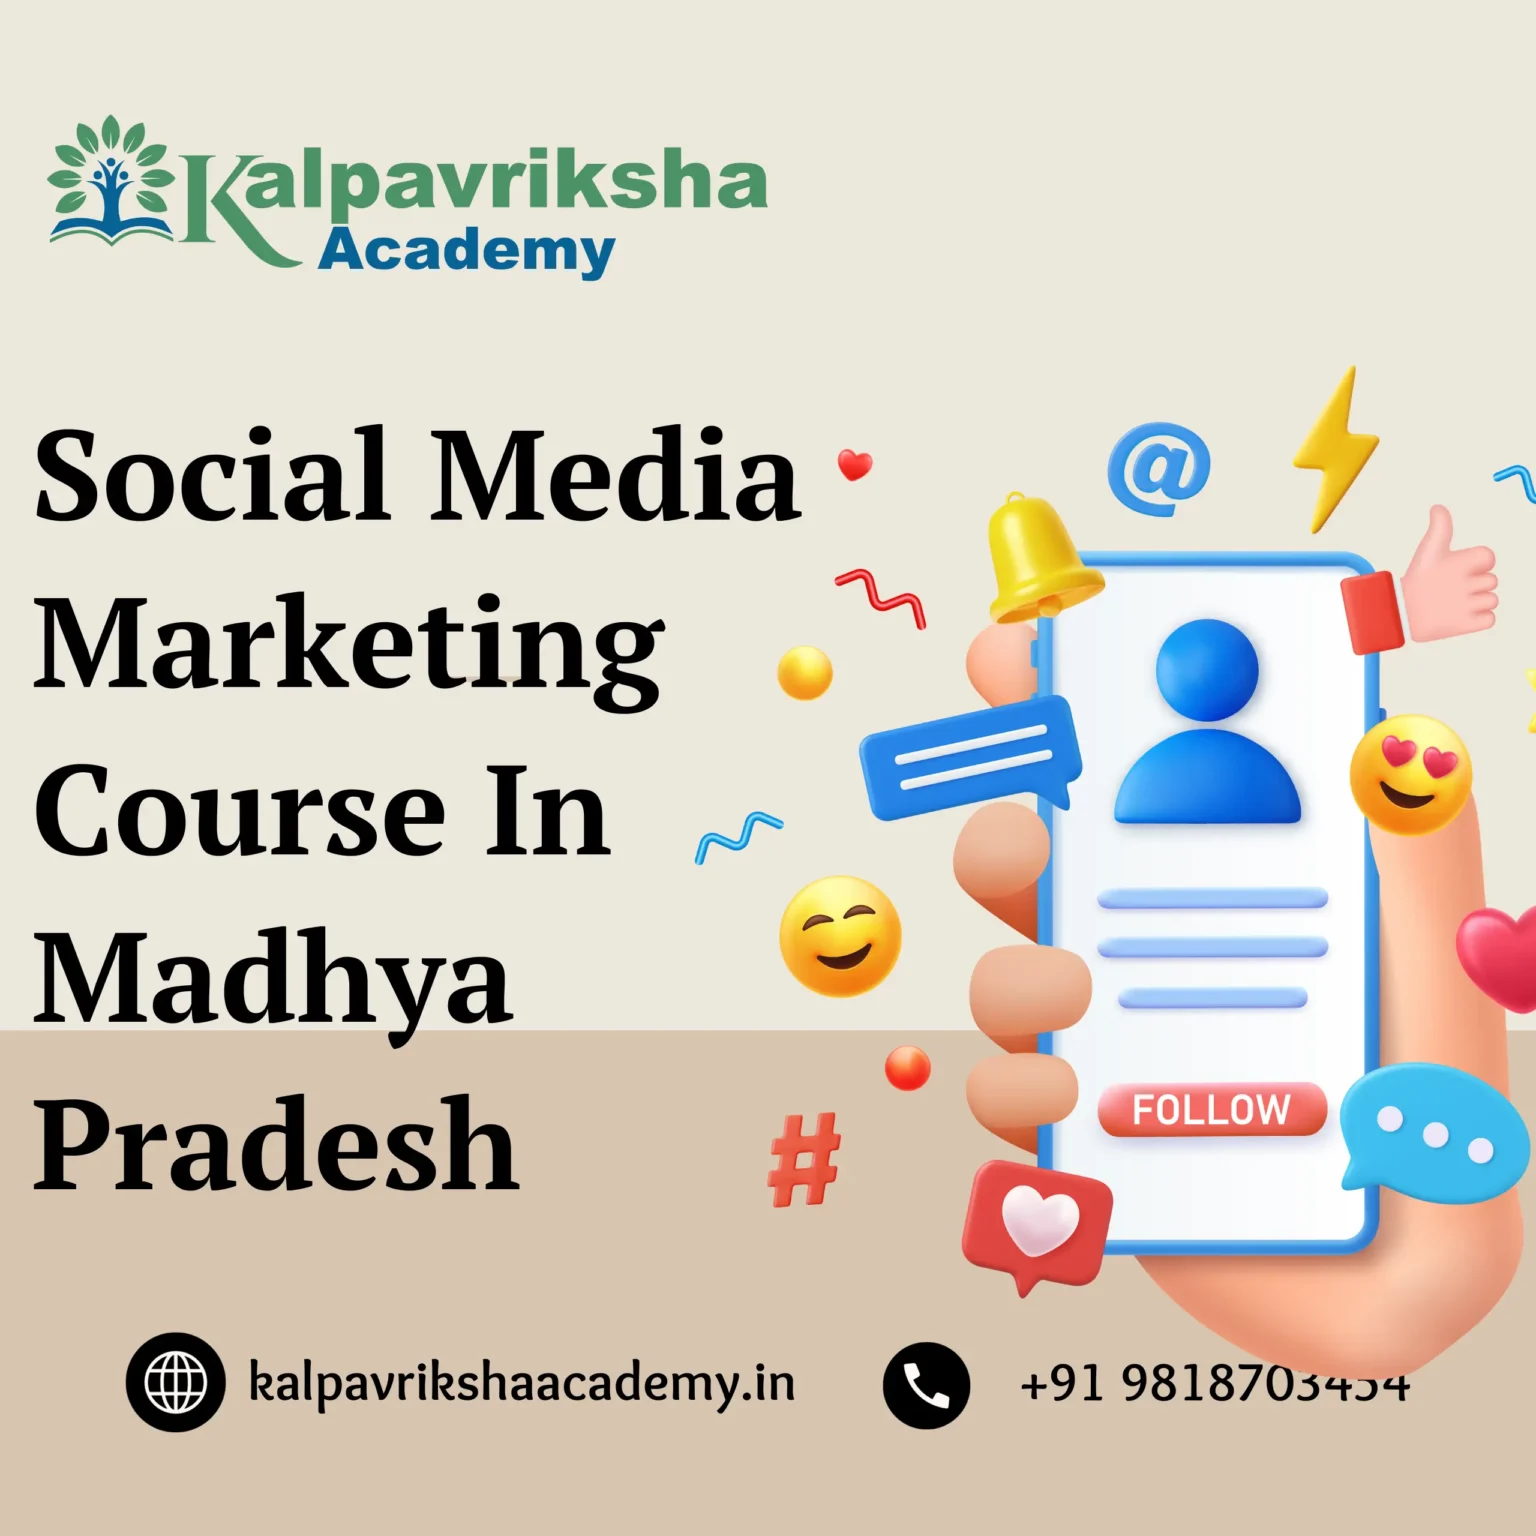 Social Media Marketing Course In Madhya Pradesh